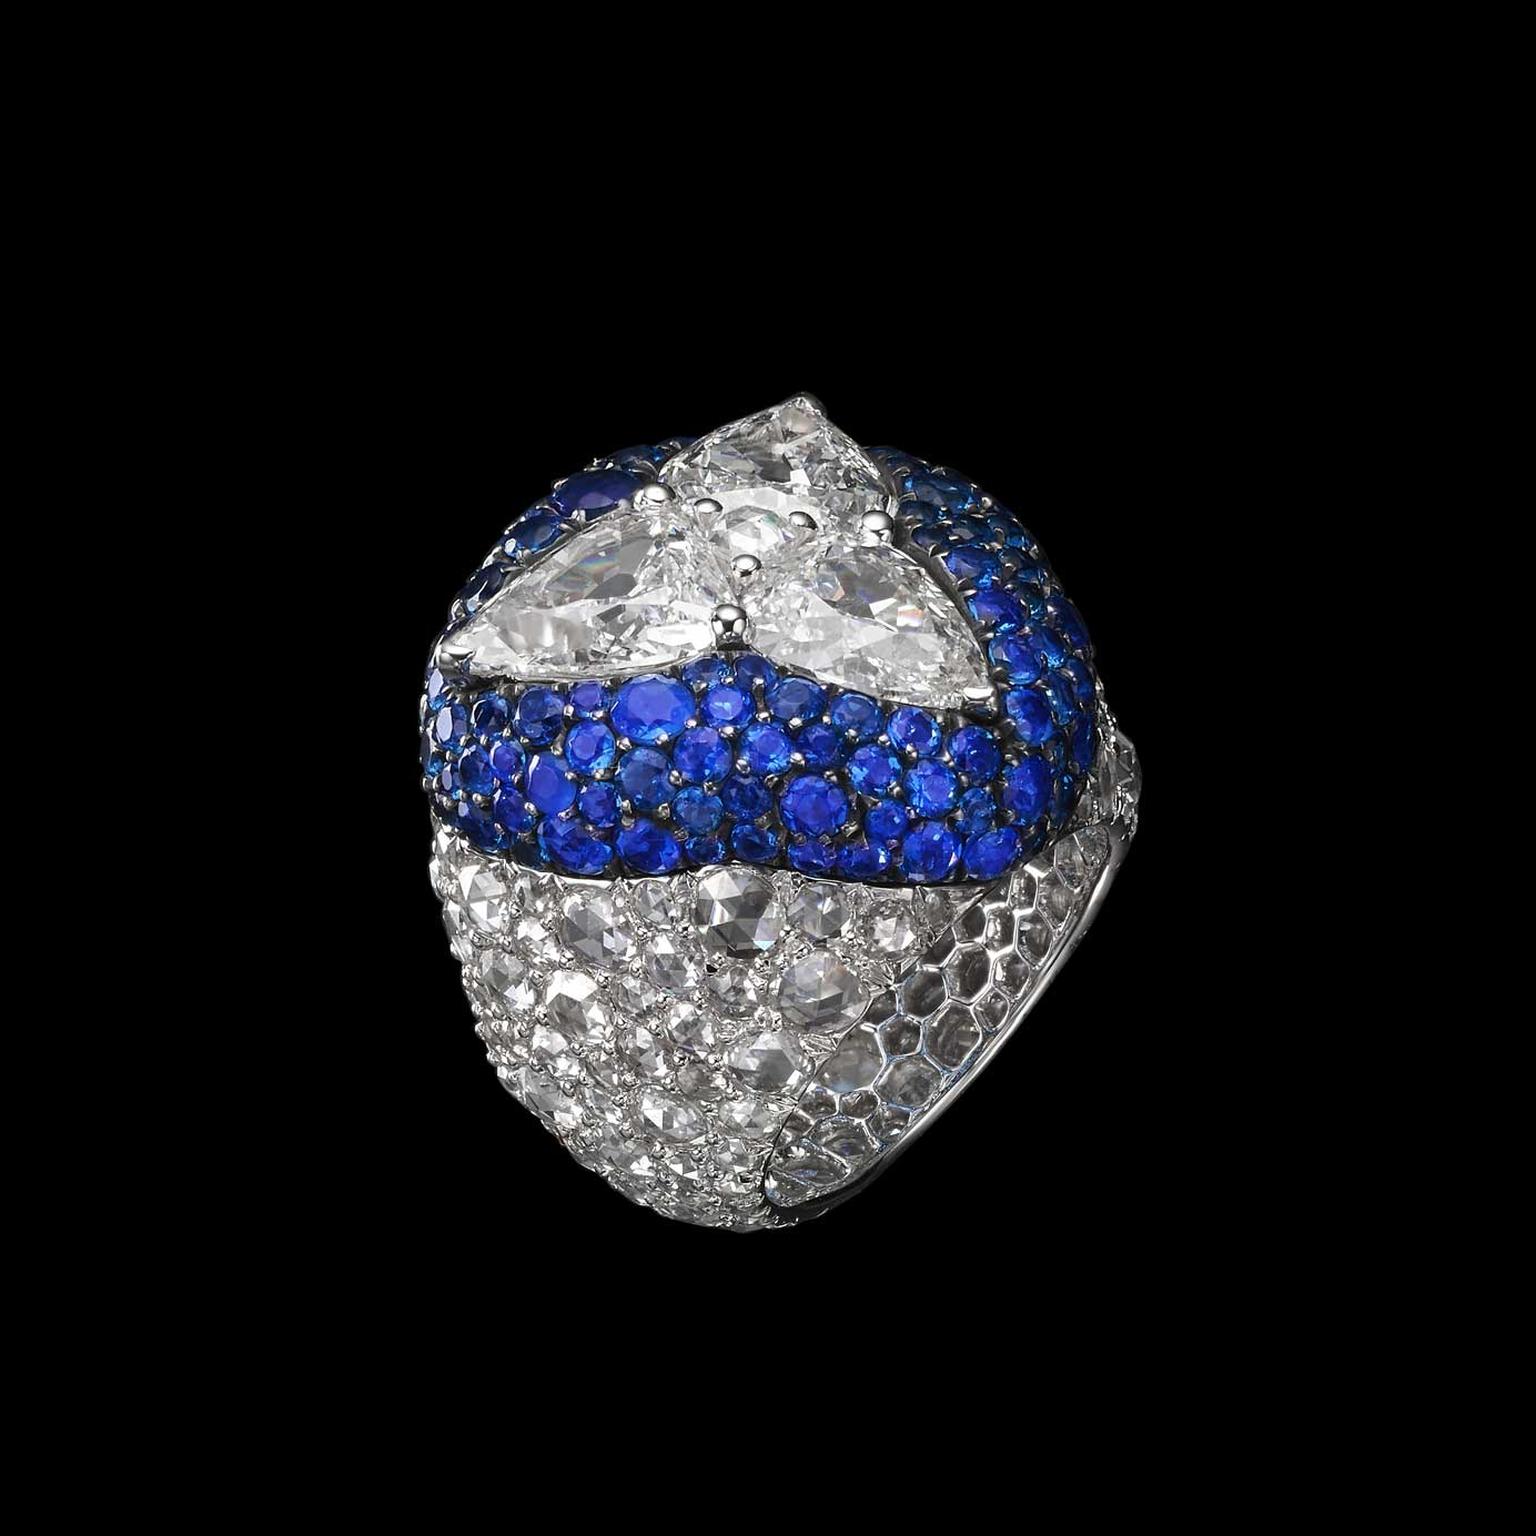 Carnet Diamond and Huaynite ring